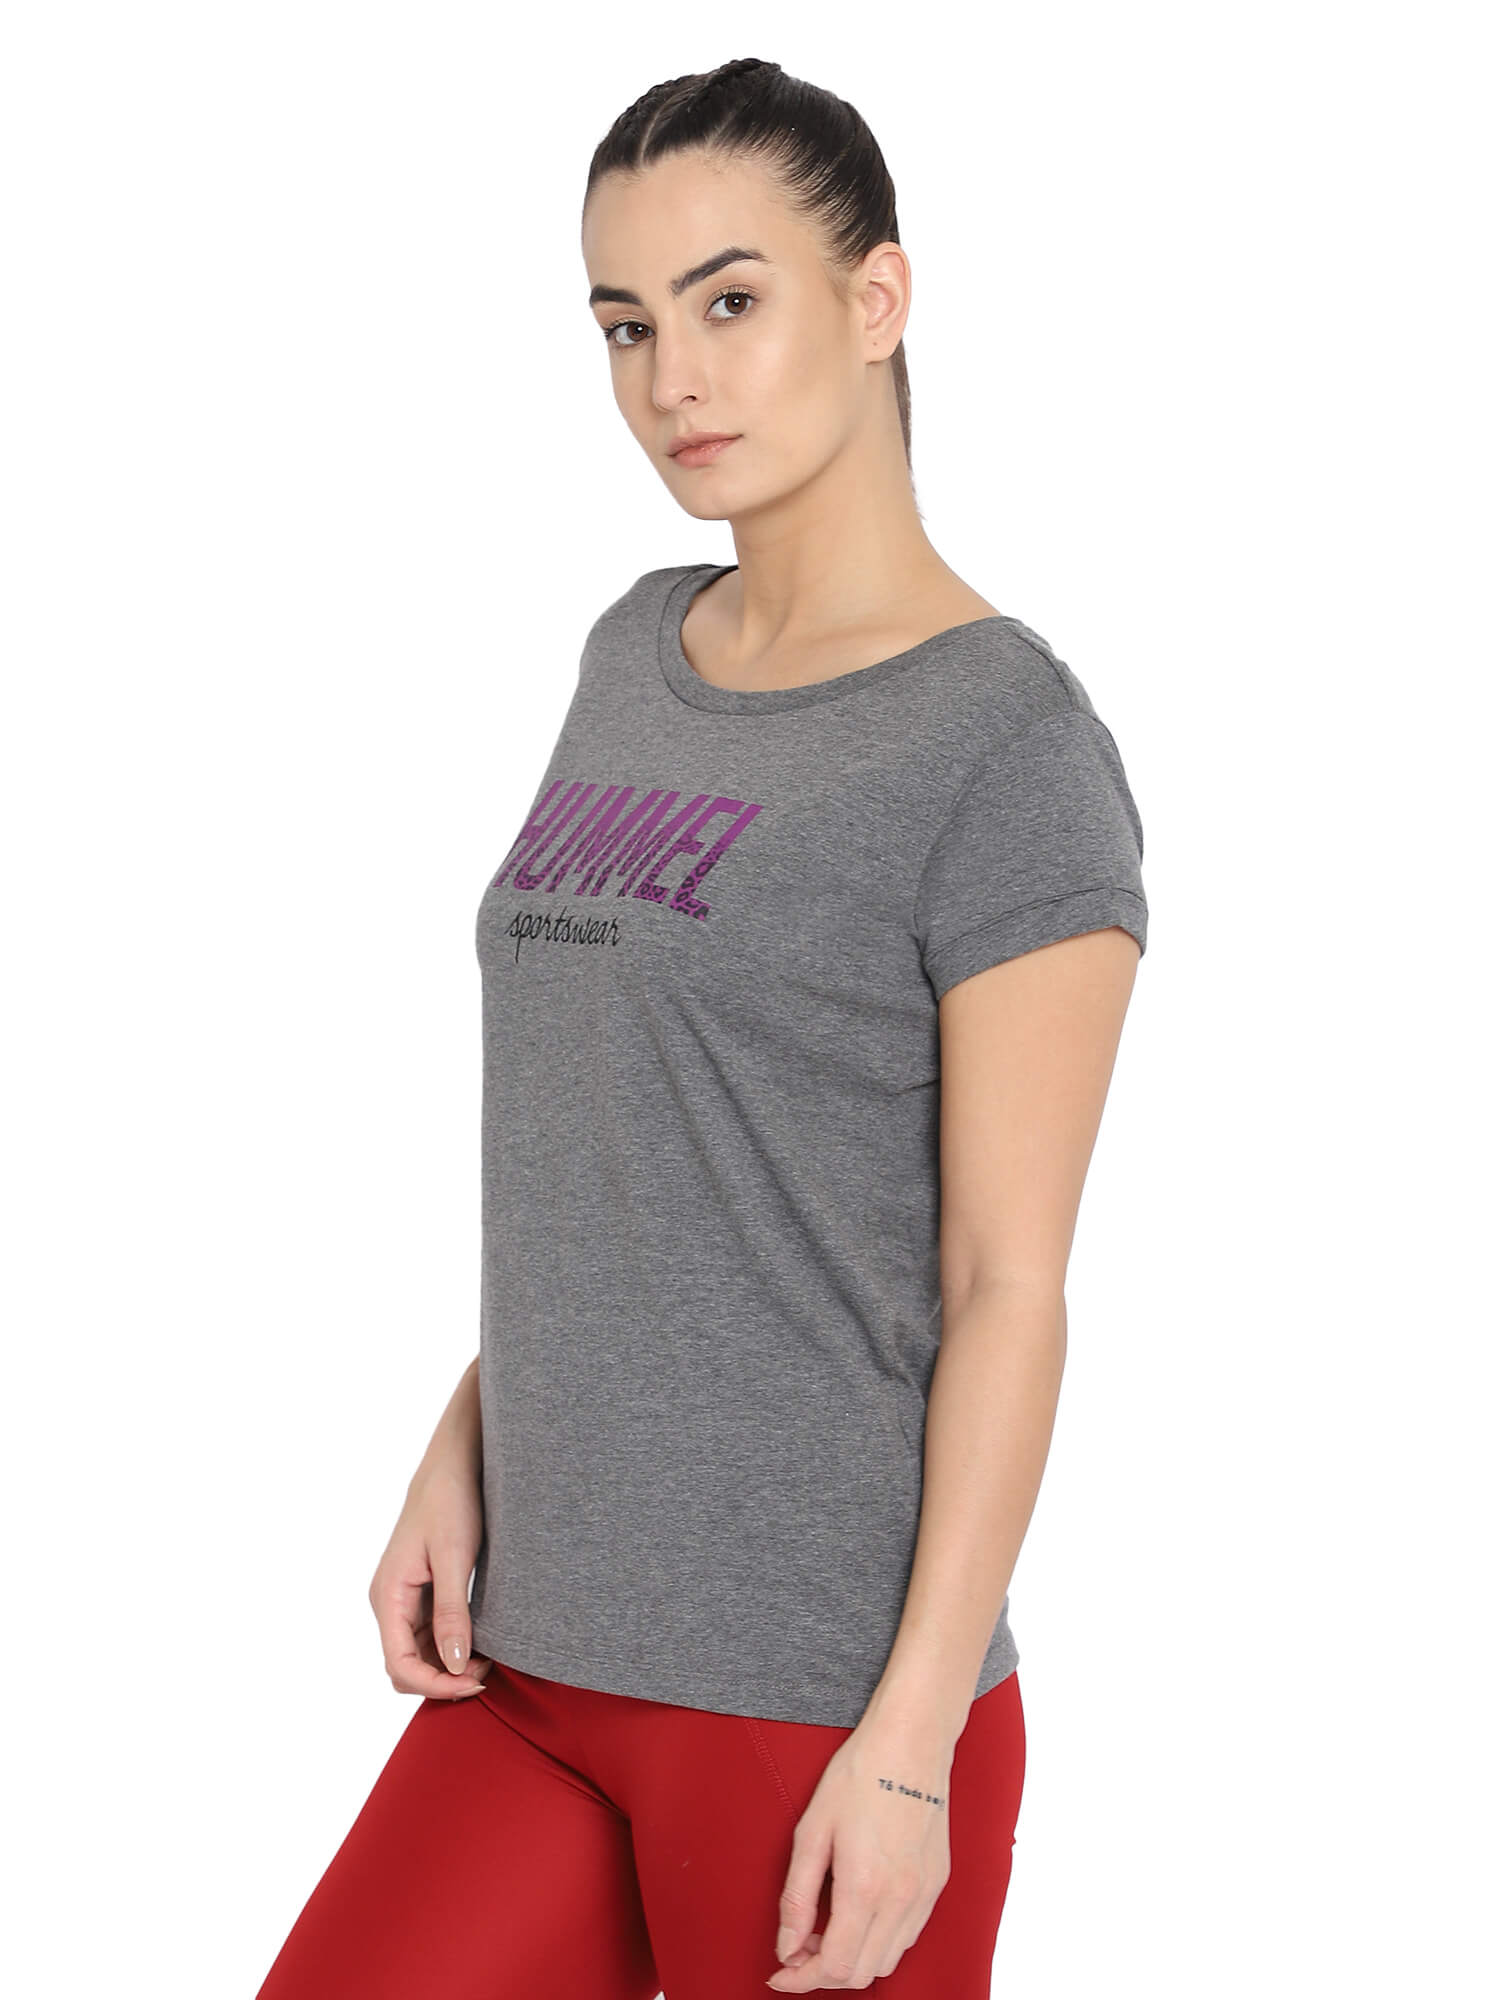 Elviria Grey T-Shirt for Women